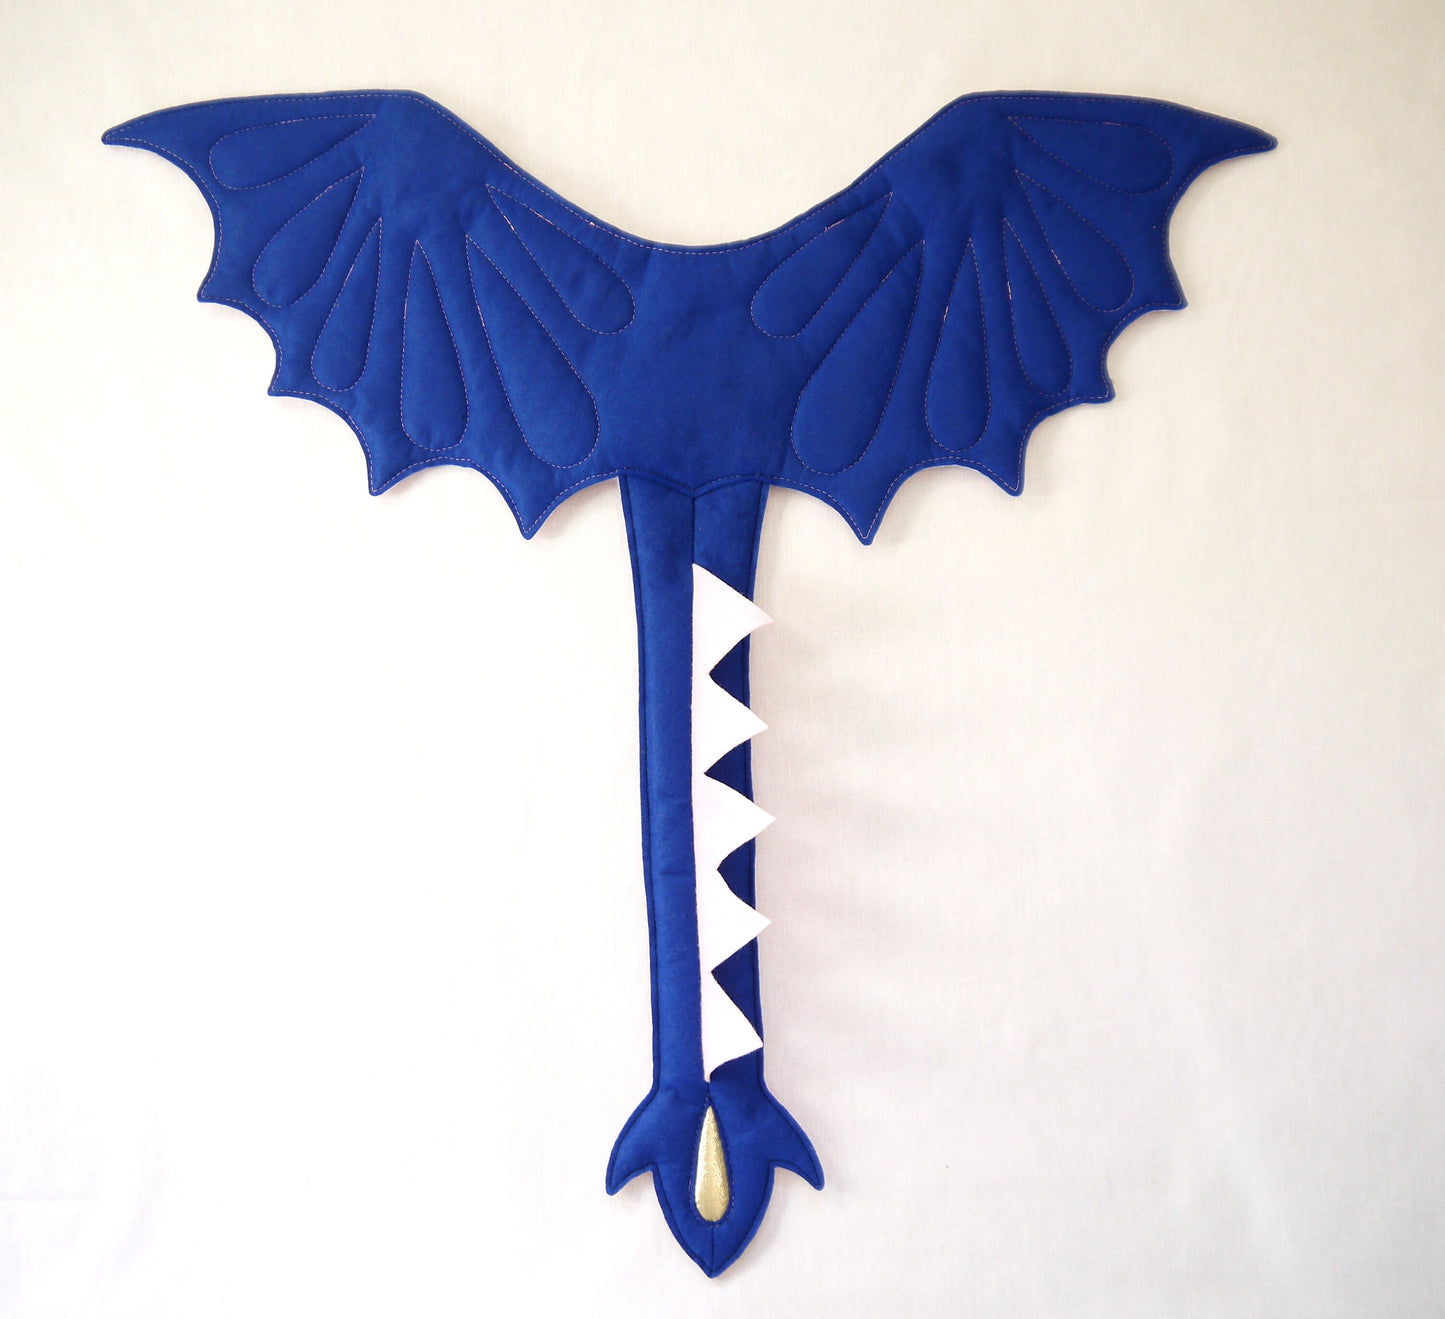 Treasure Dragon costume wings and mask